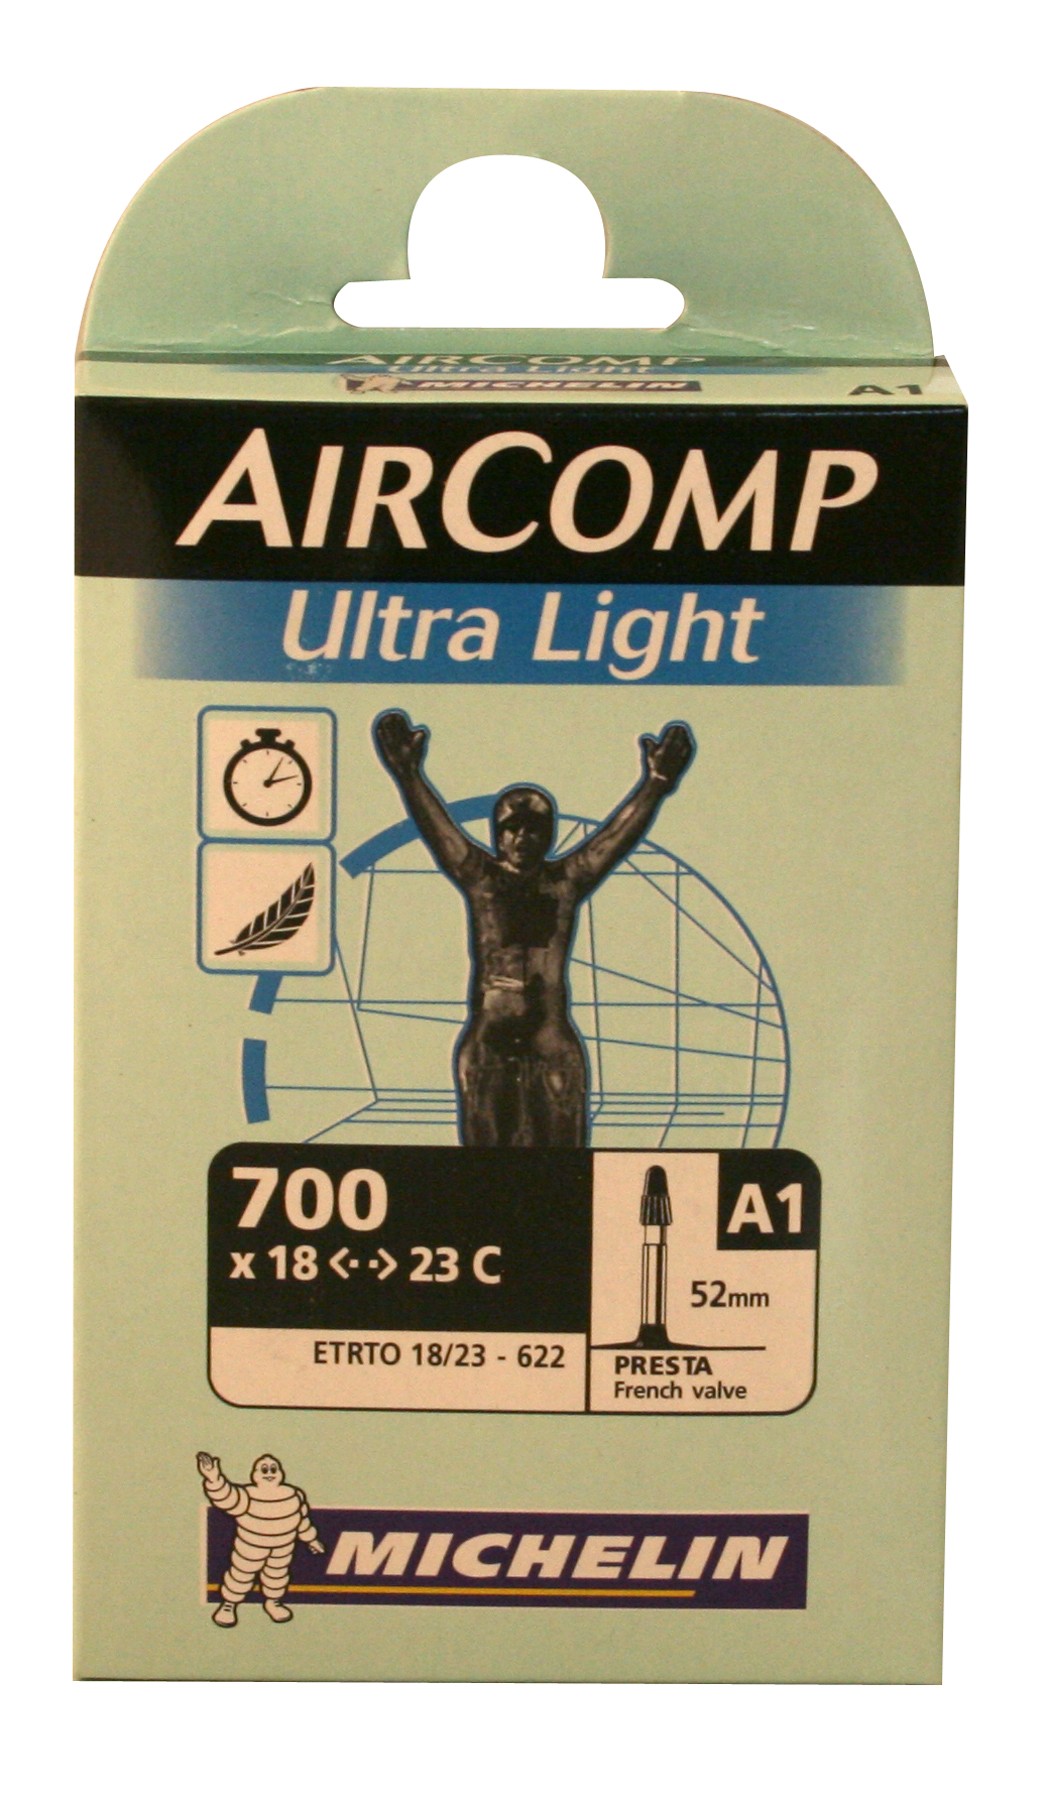 Michelin CAA Route Aircomp A1 U.Light 700X18/23 Presta 52